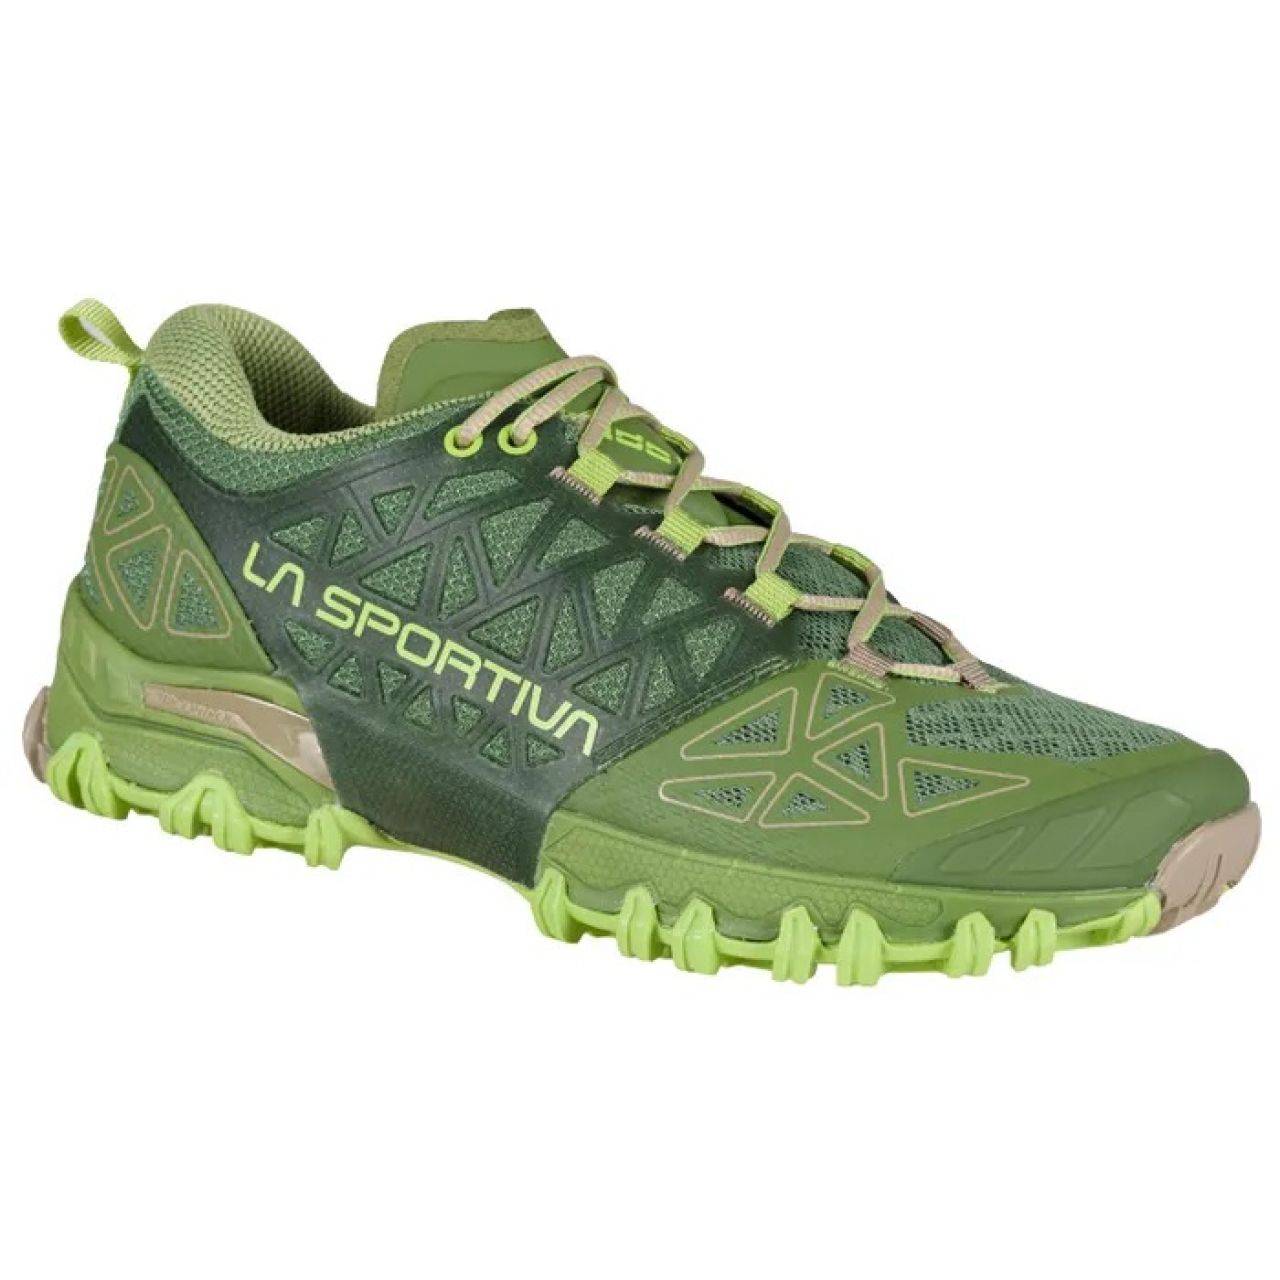 LA SPORTIVA BUSHIDO 2 KALE ET LIME GREEN chaussure de  trail